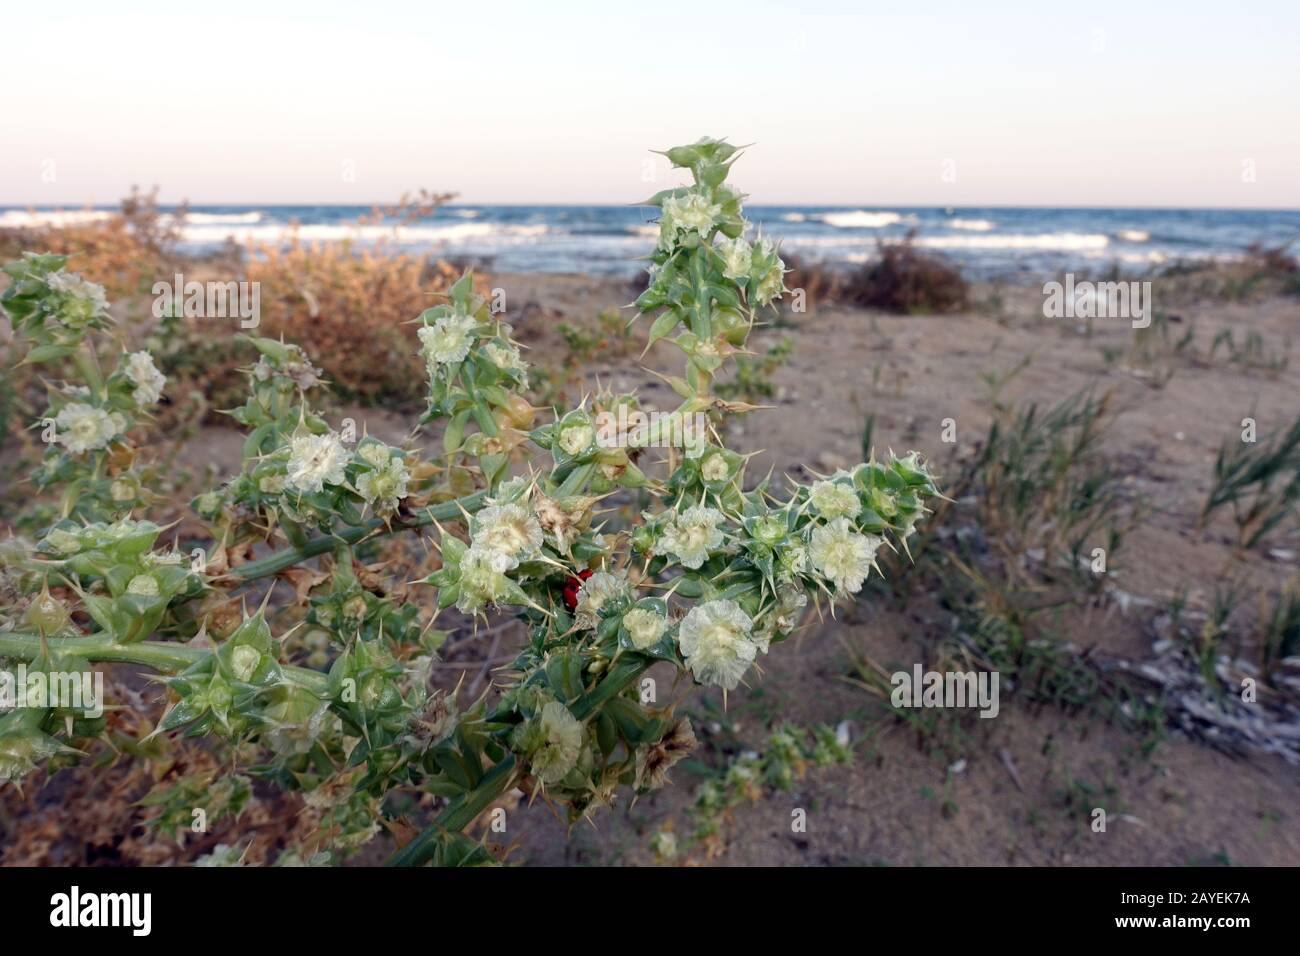 prickly saltwort or prickly glasswort (Kali turgidum, Syn. Salsola kali, Kali tragus) Stock Photo